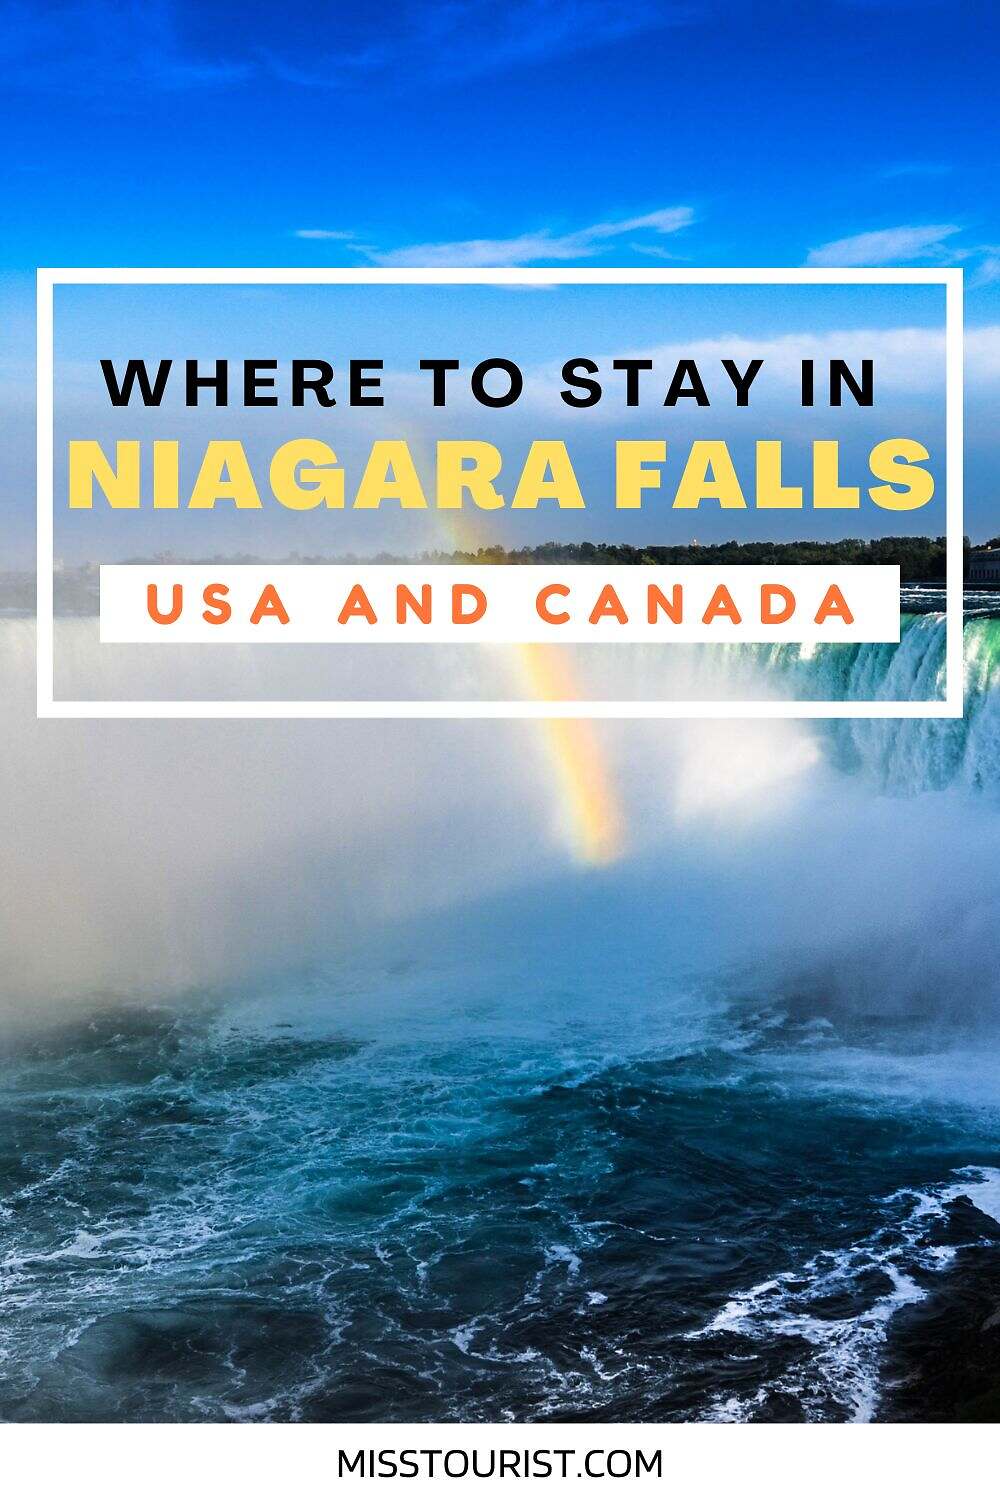 where to stay in niagara falls usa and canada pin 2.jpg